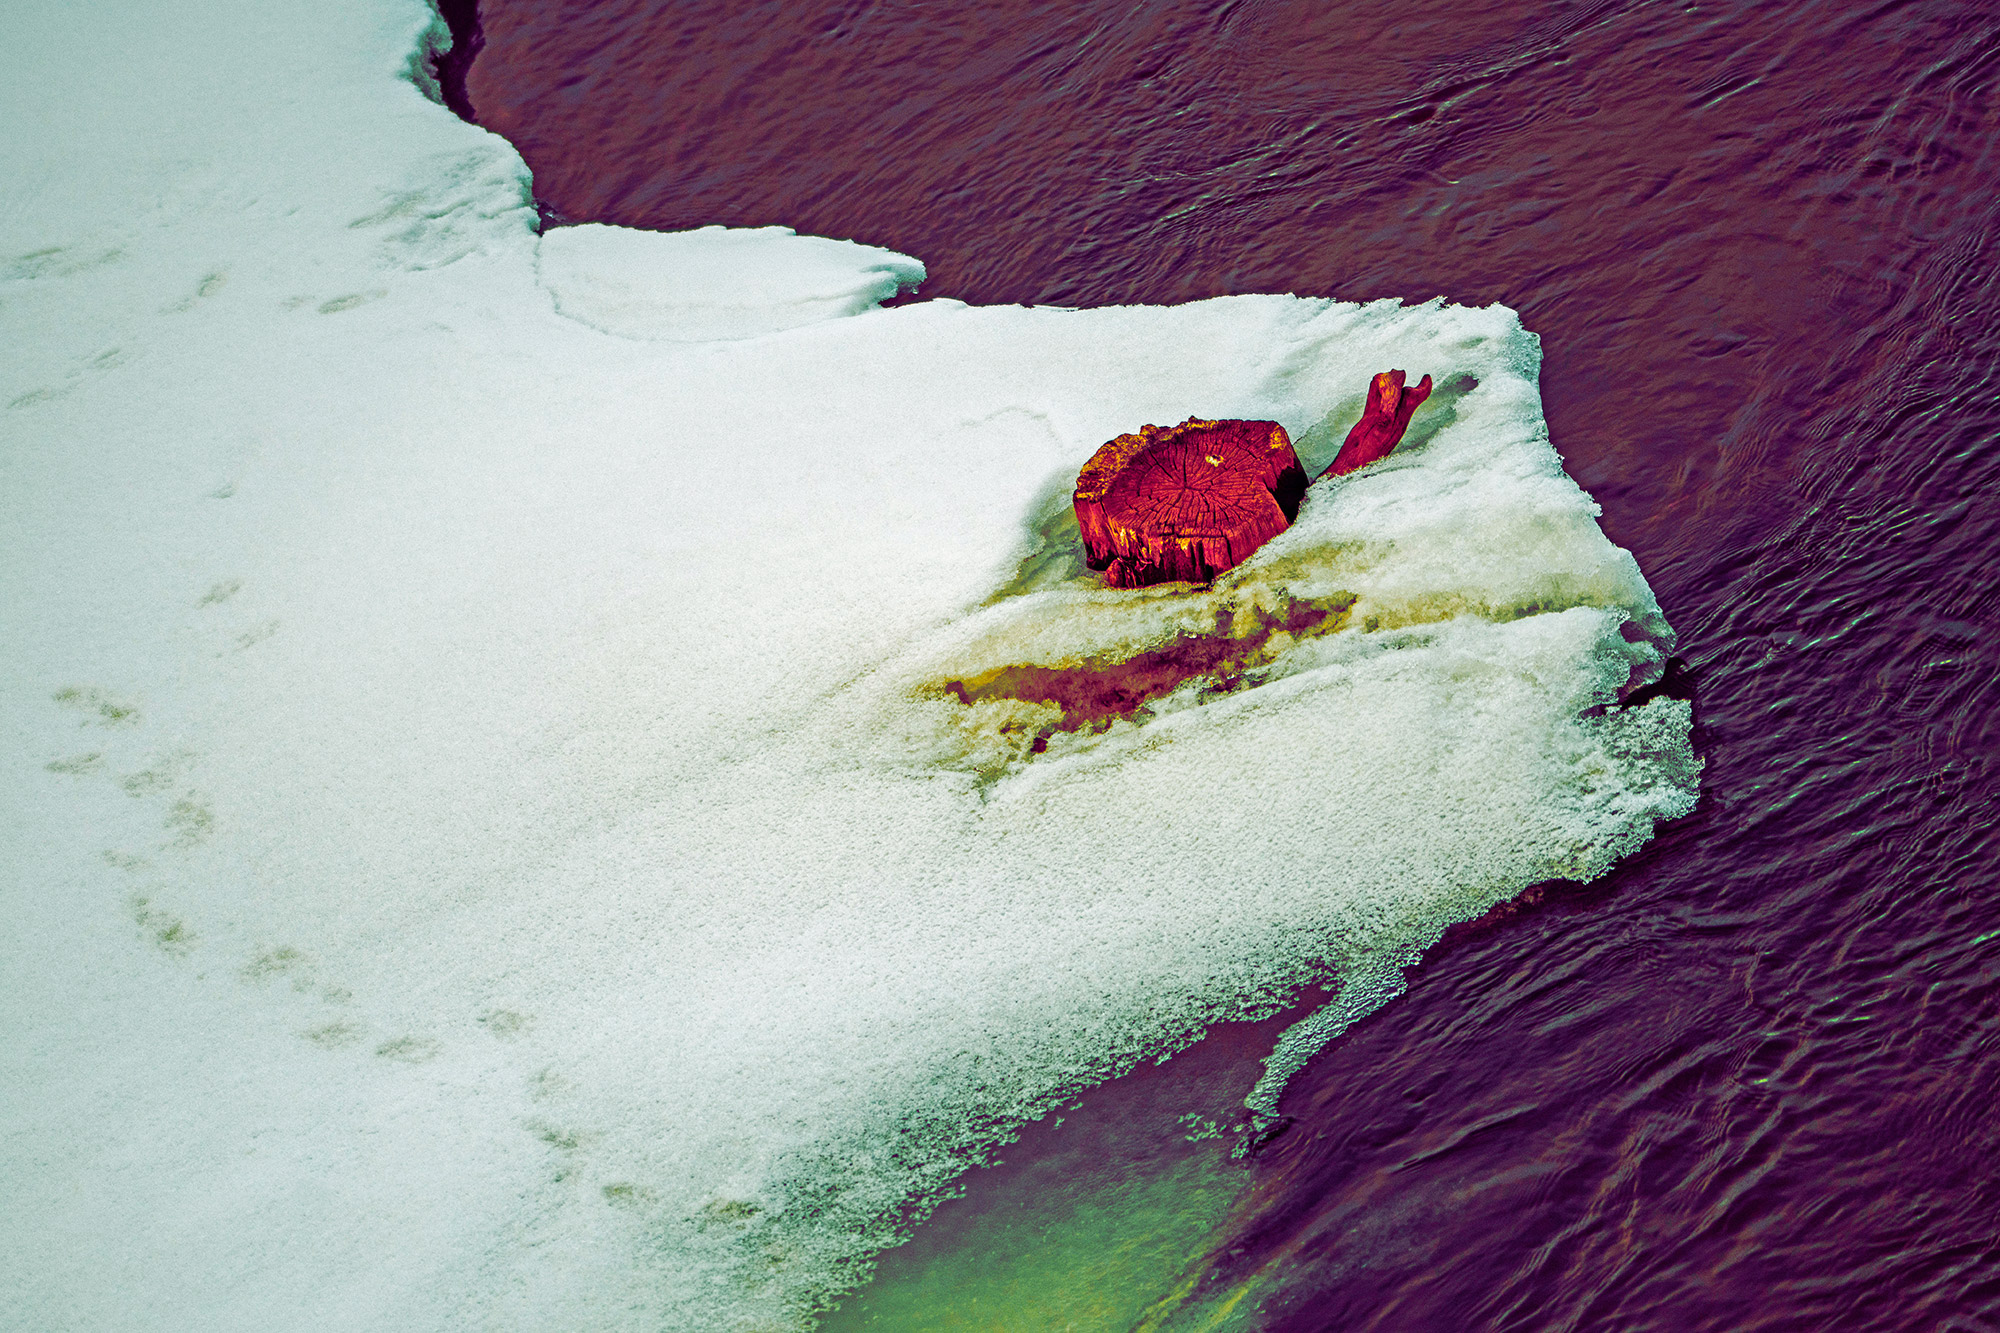 Tree Stump Eyed Snow Face Creature Along River Shoreline (Color Photo)